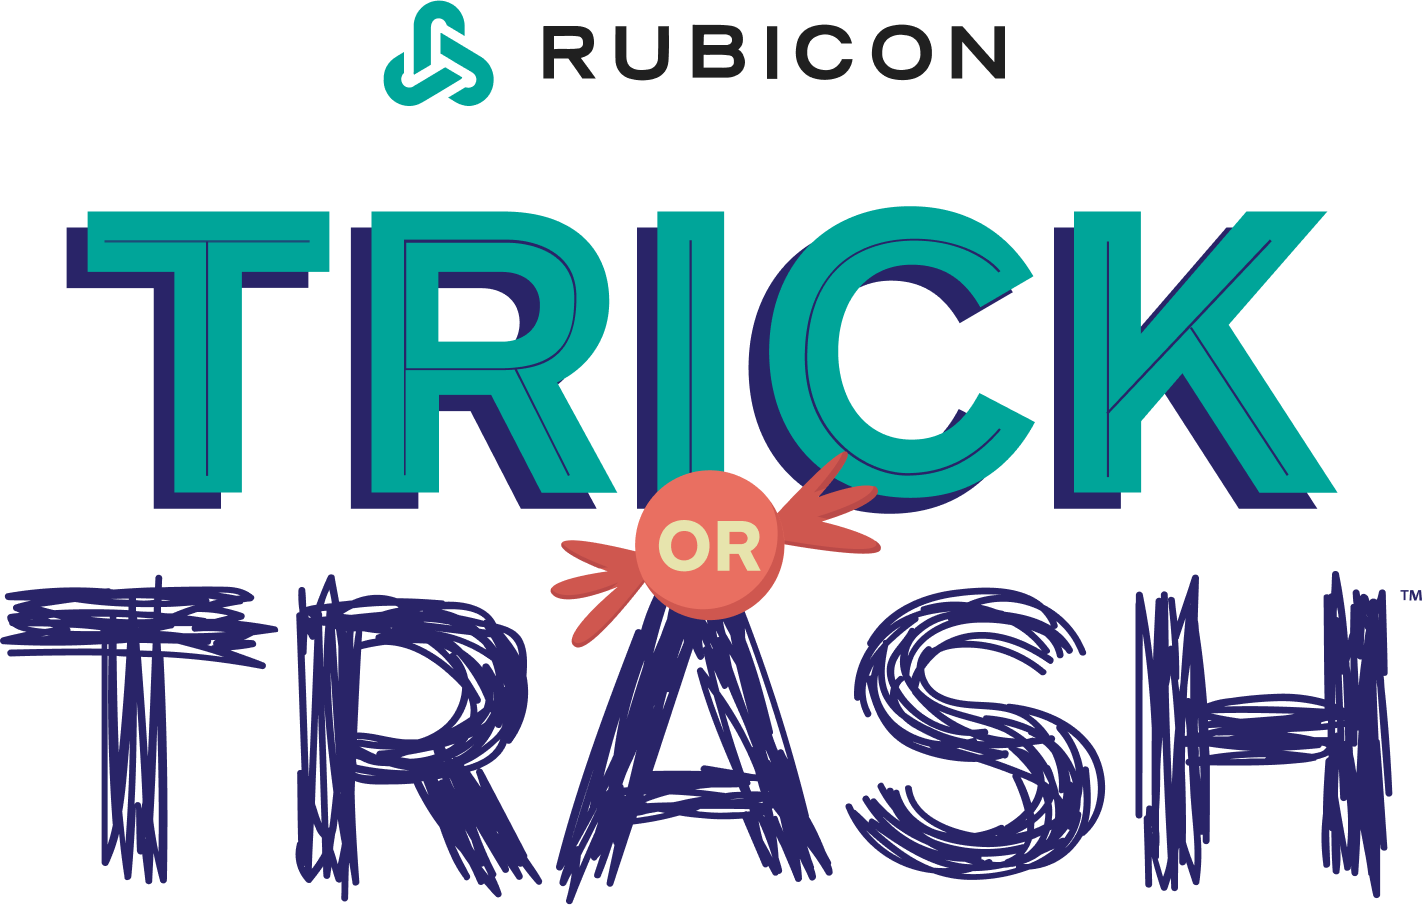 Rubicon Trick or Trash logo